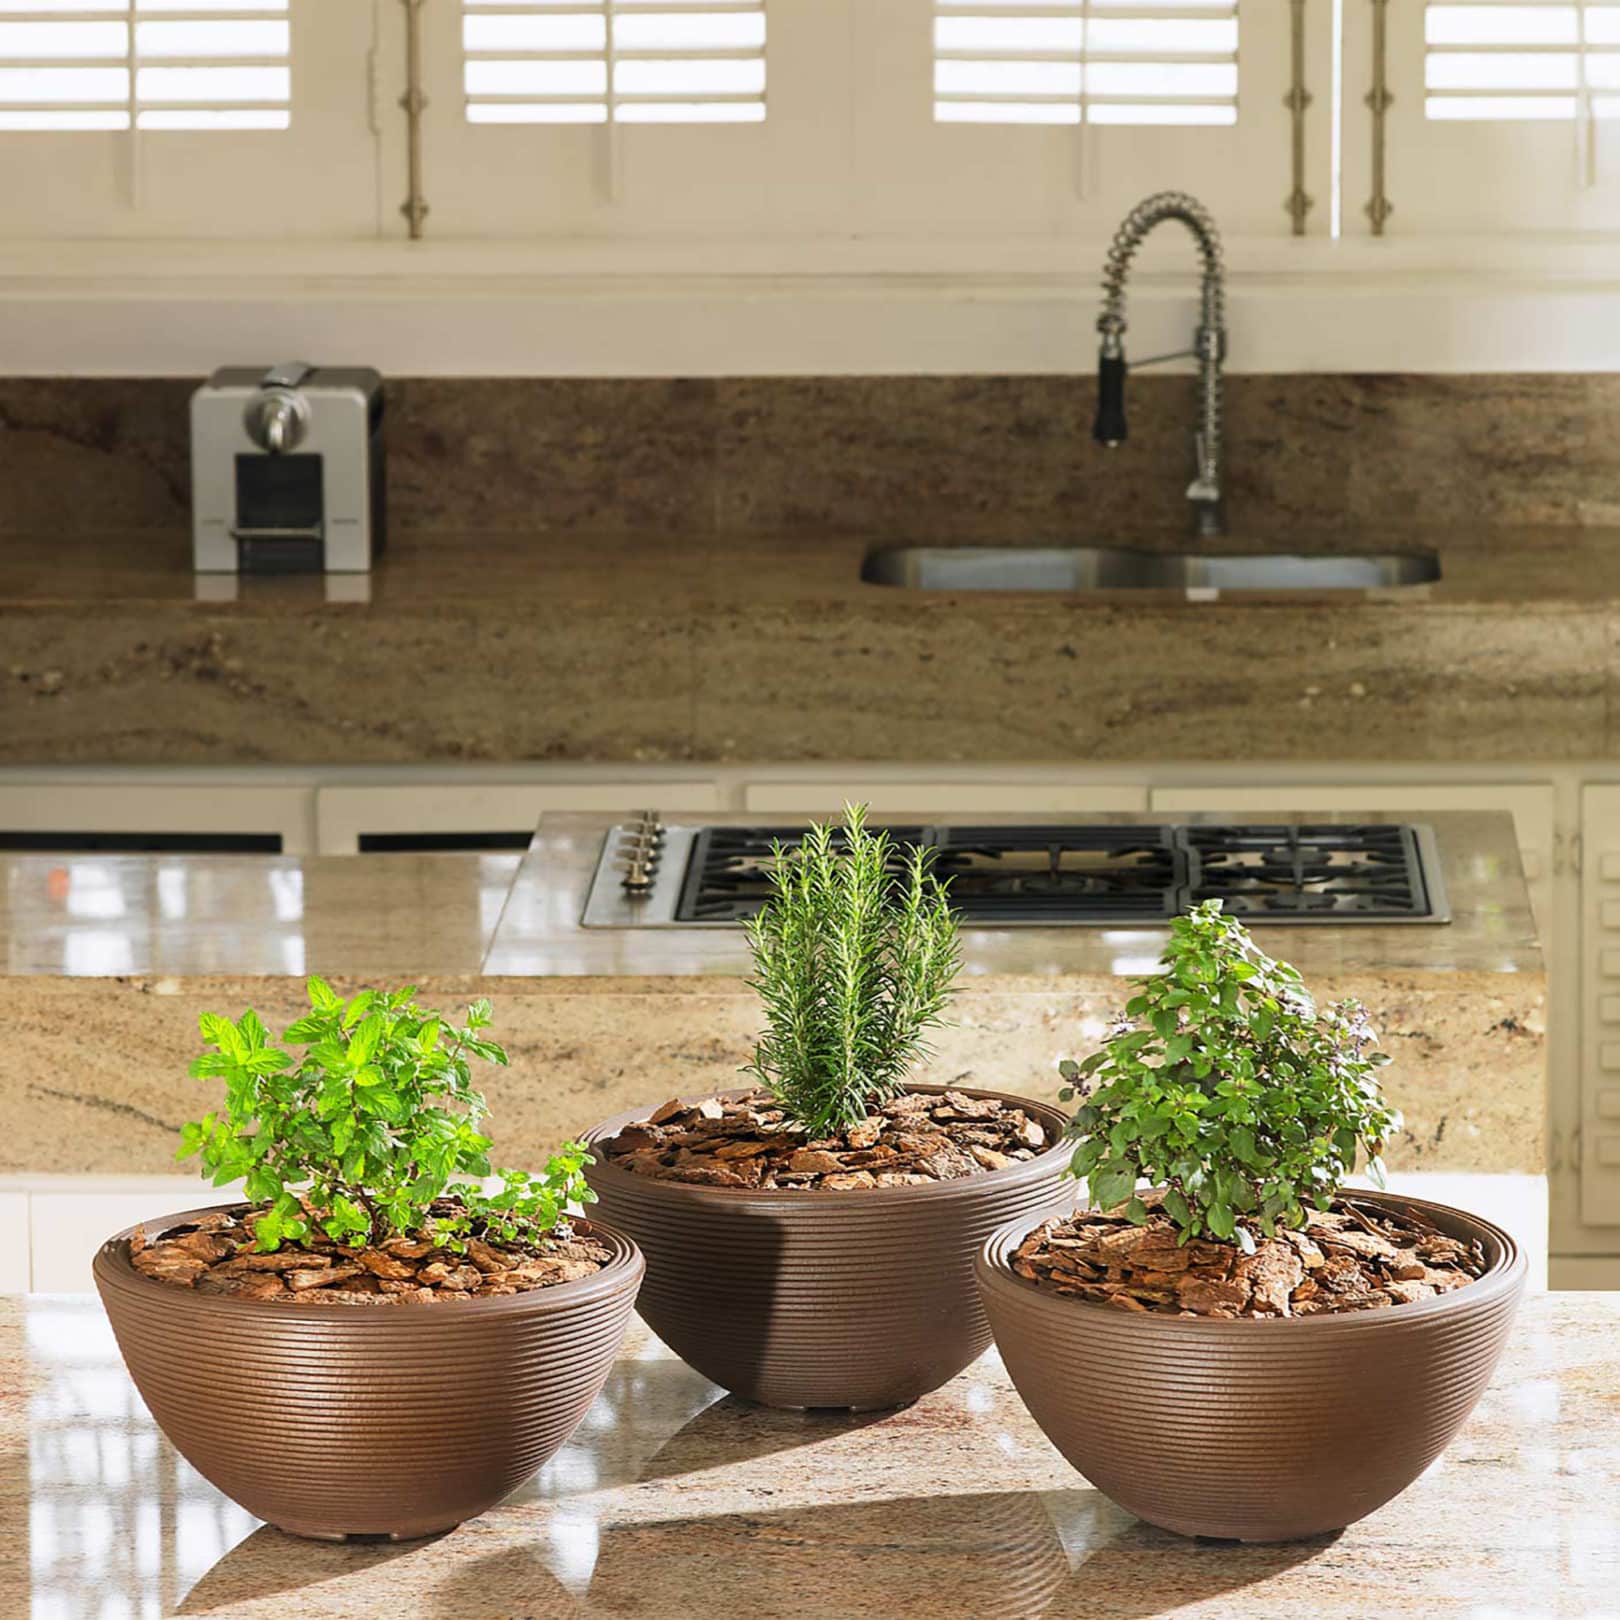 Kitchen Counter with small Delano Planters